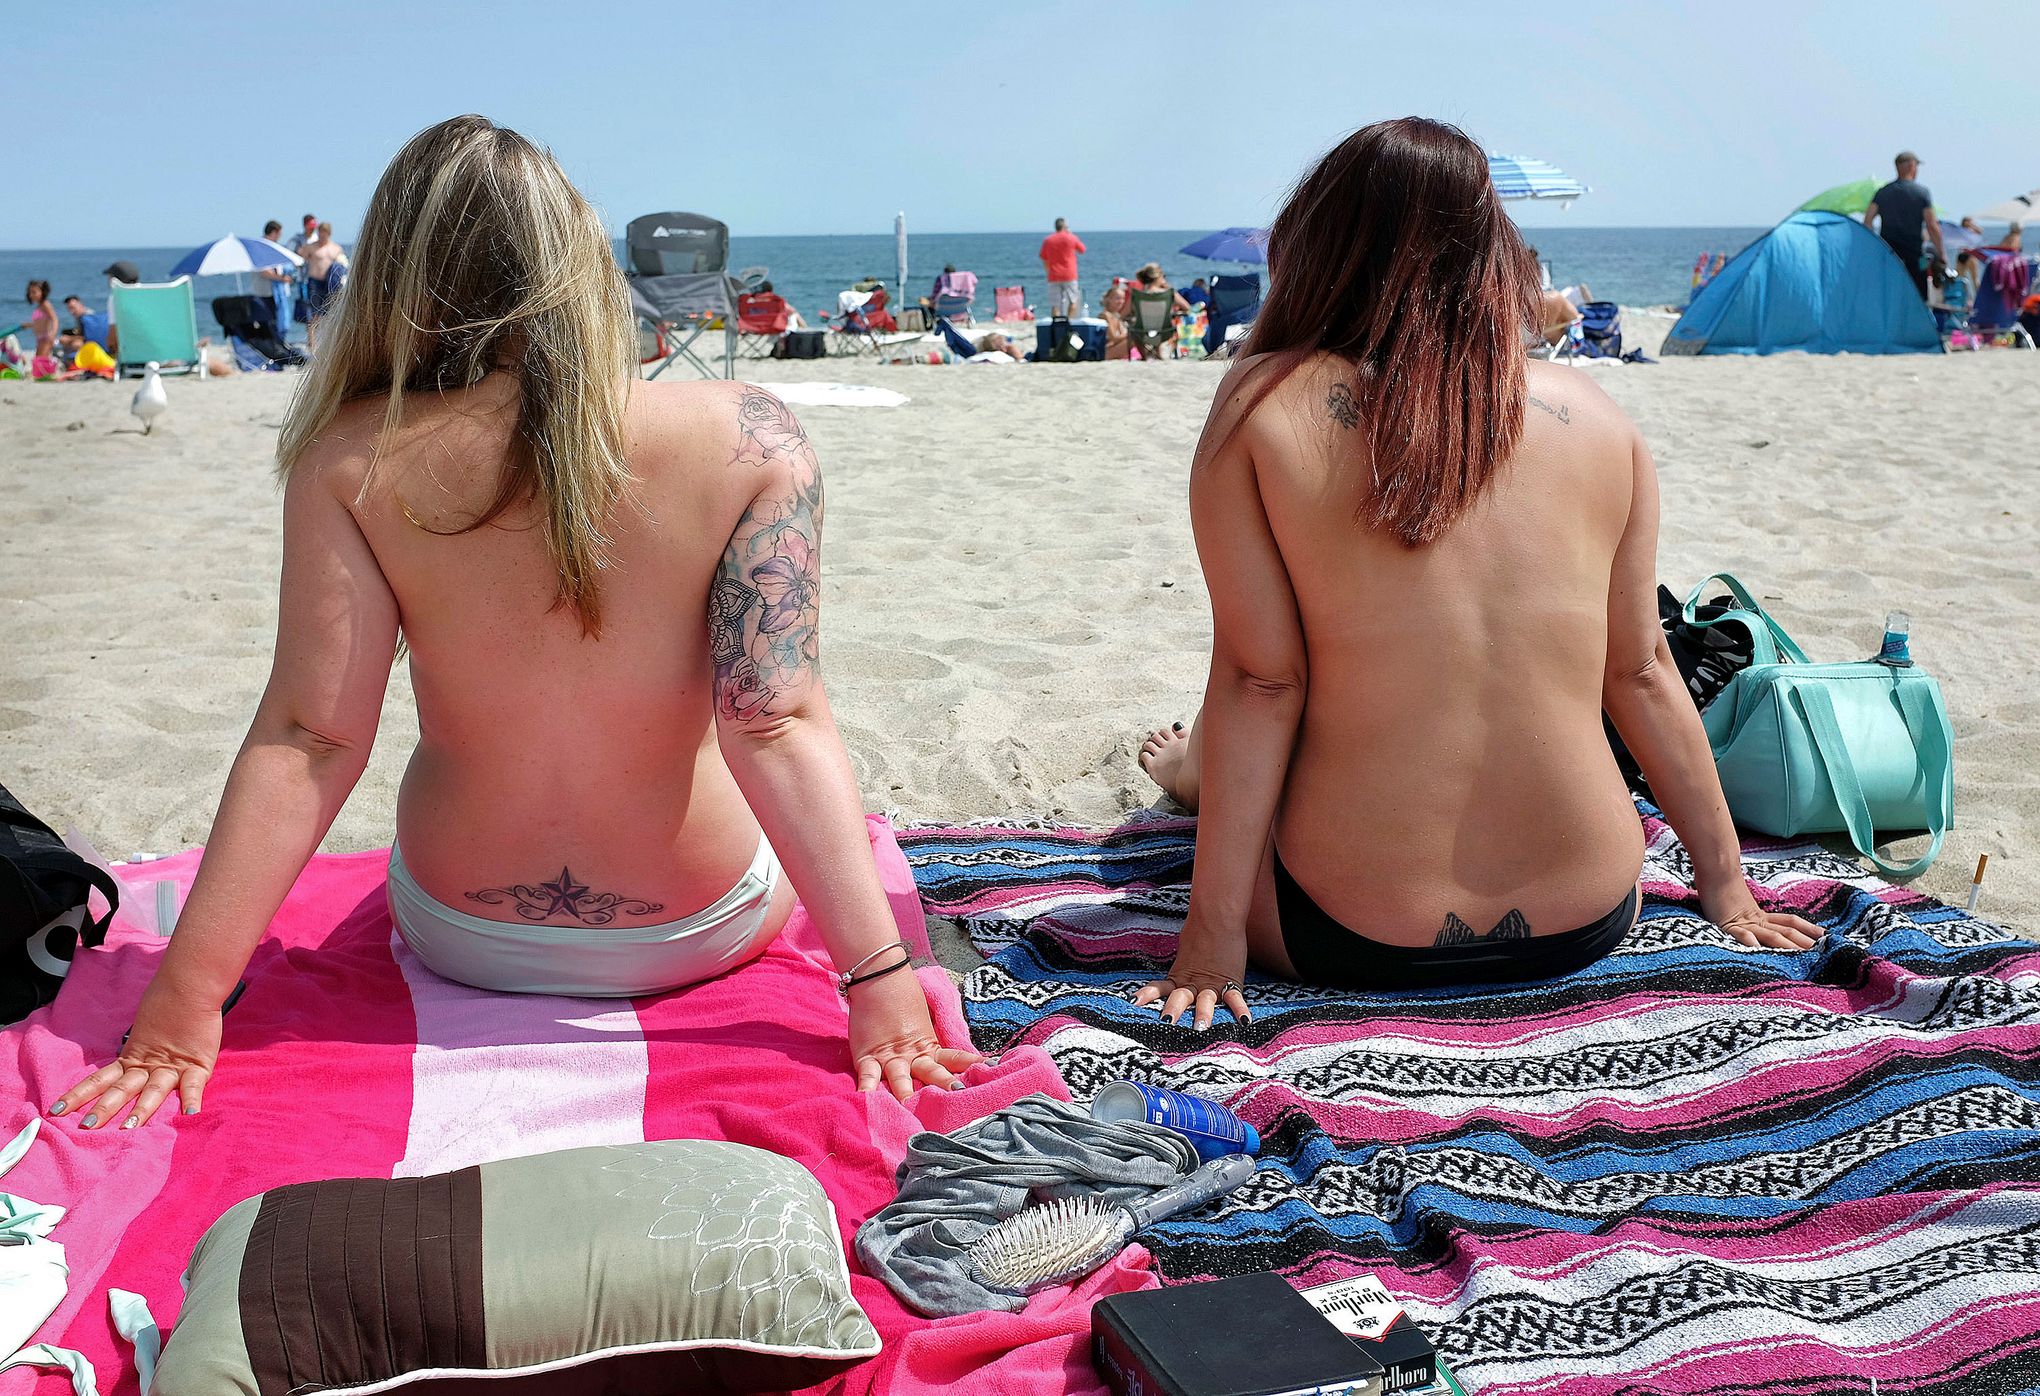 alvin bradshaw share nudist beach sex videos photos